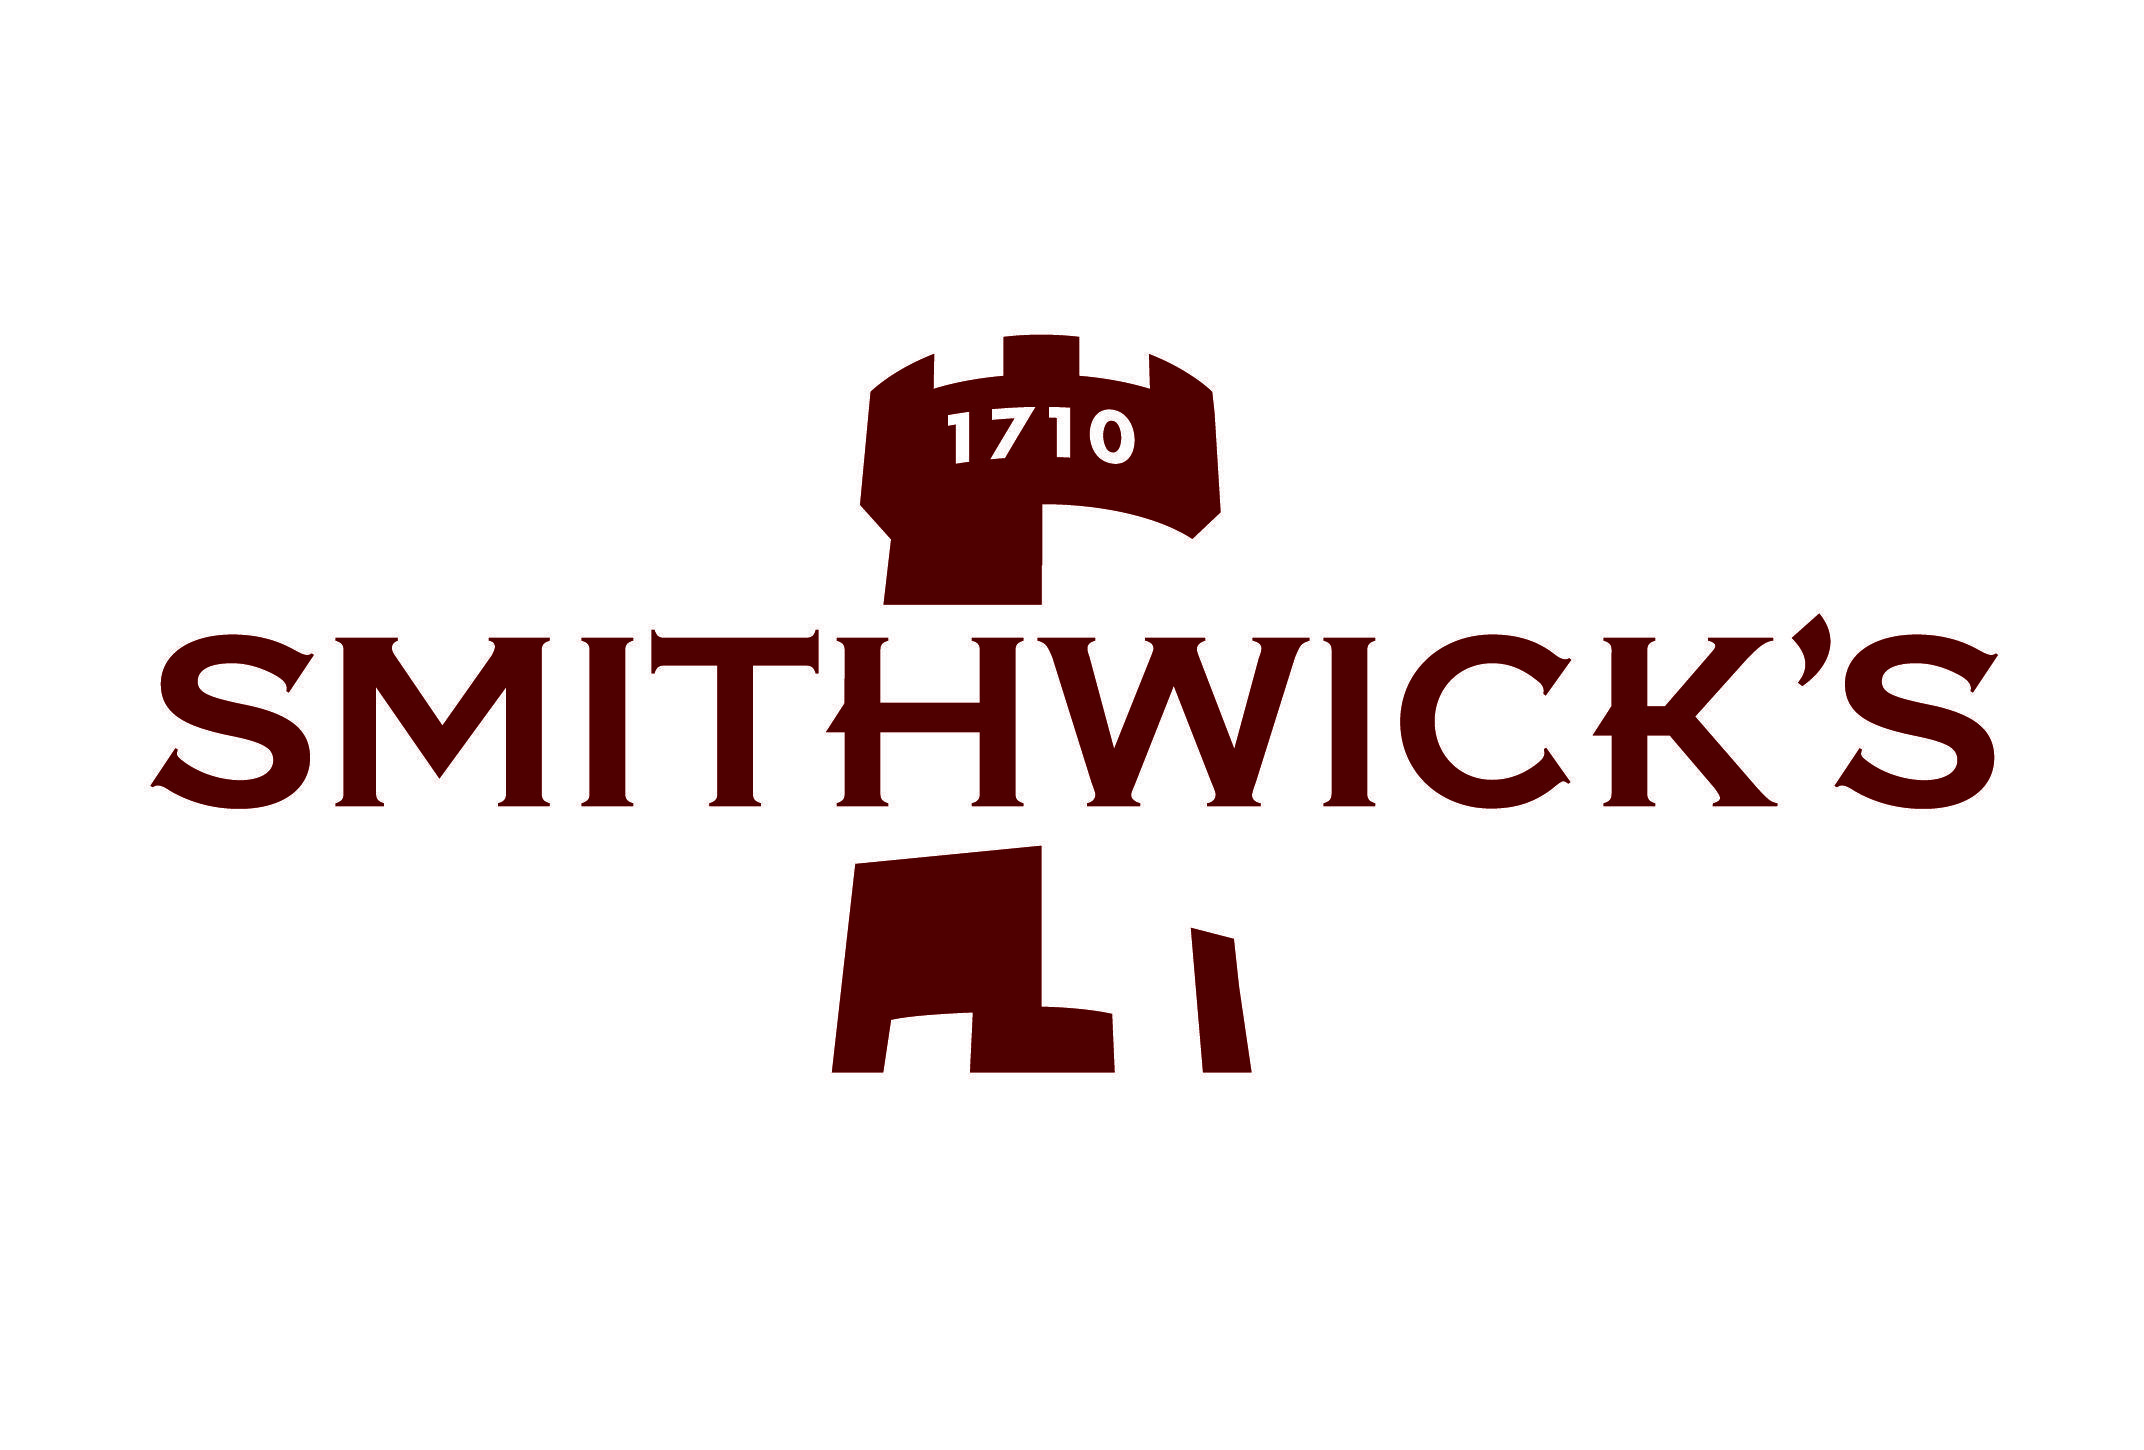 Smithwick's Beer Logo - The Smithwick's Irish beer